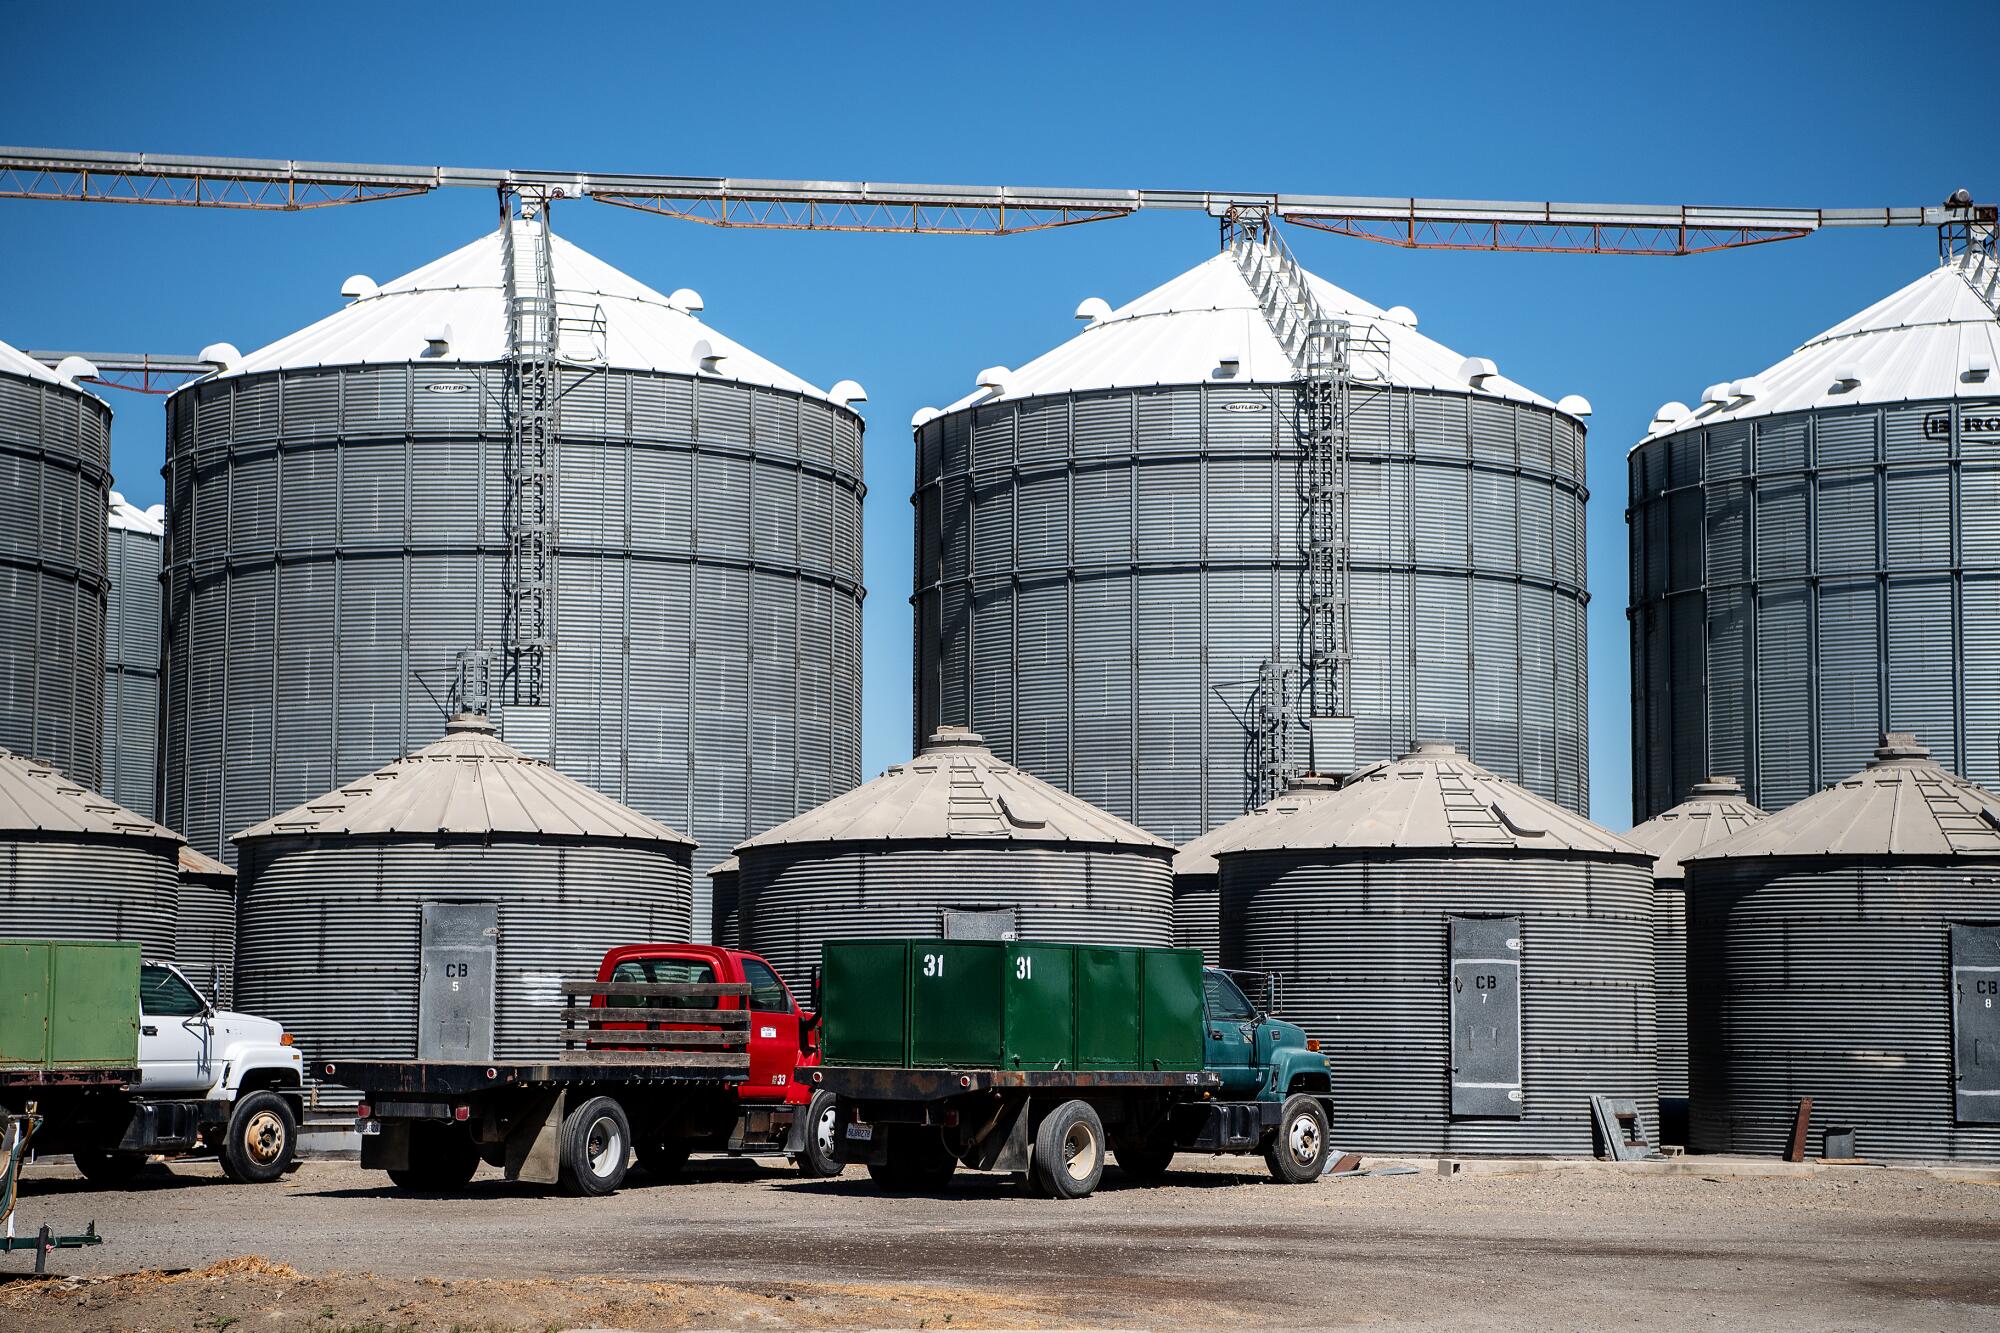 Three farm vehicles are parked next to grain silos